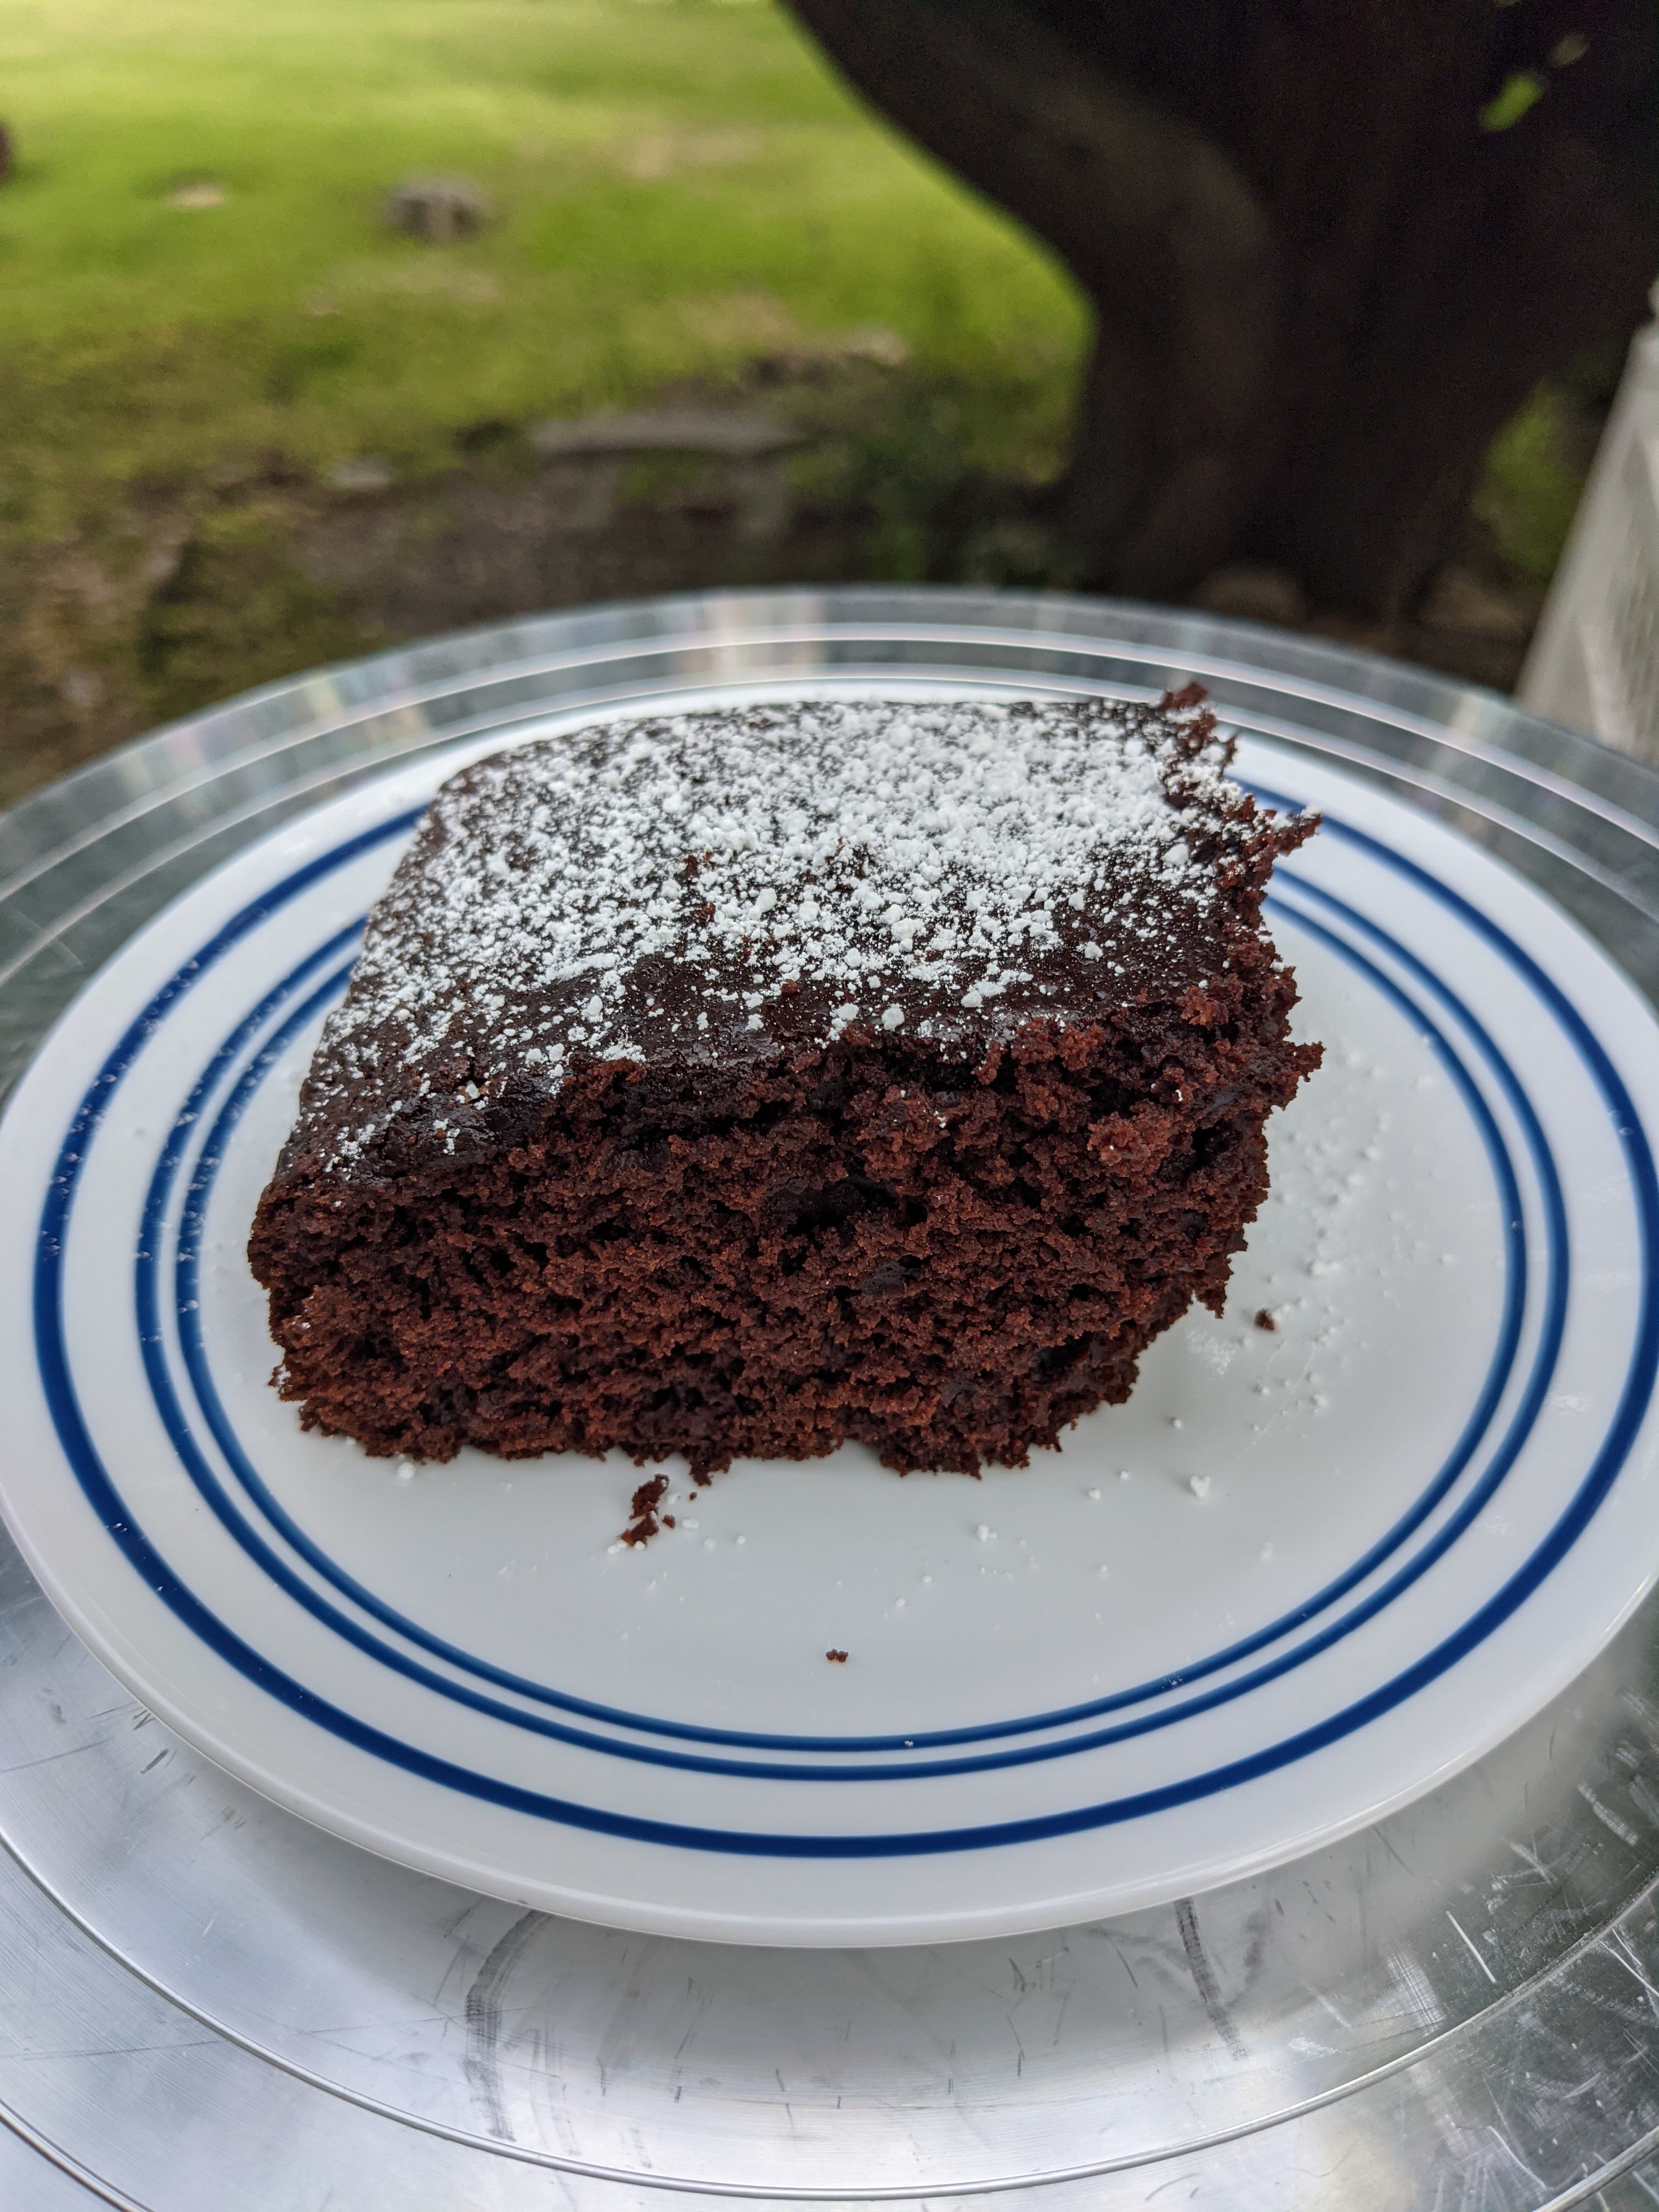 A slice of chocolate snack cake